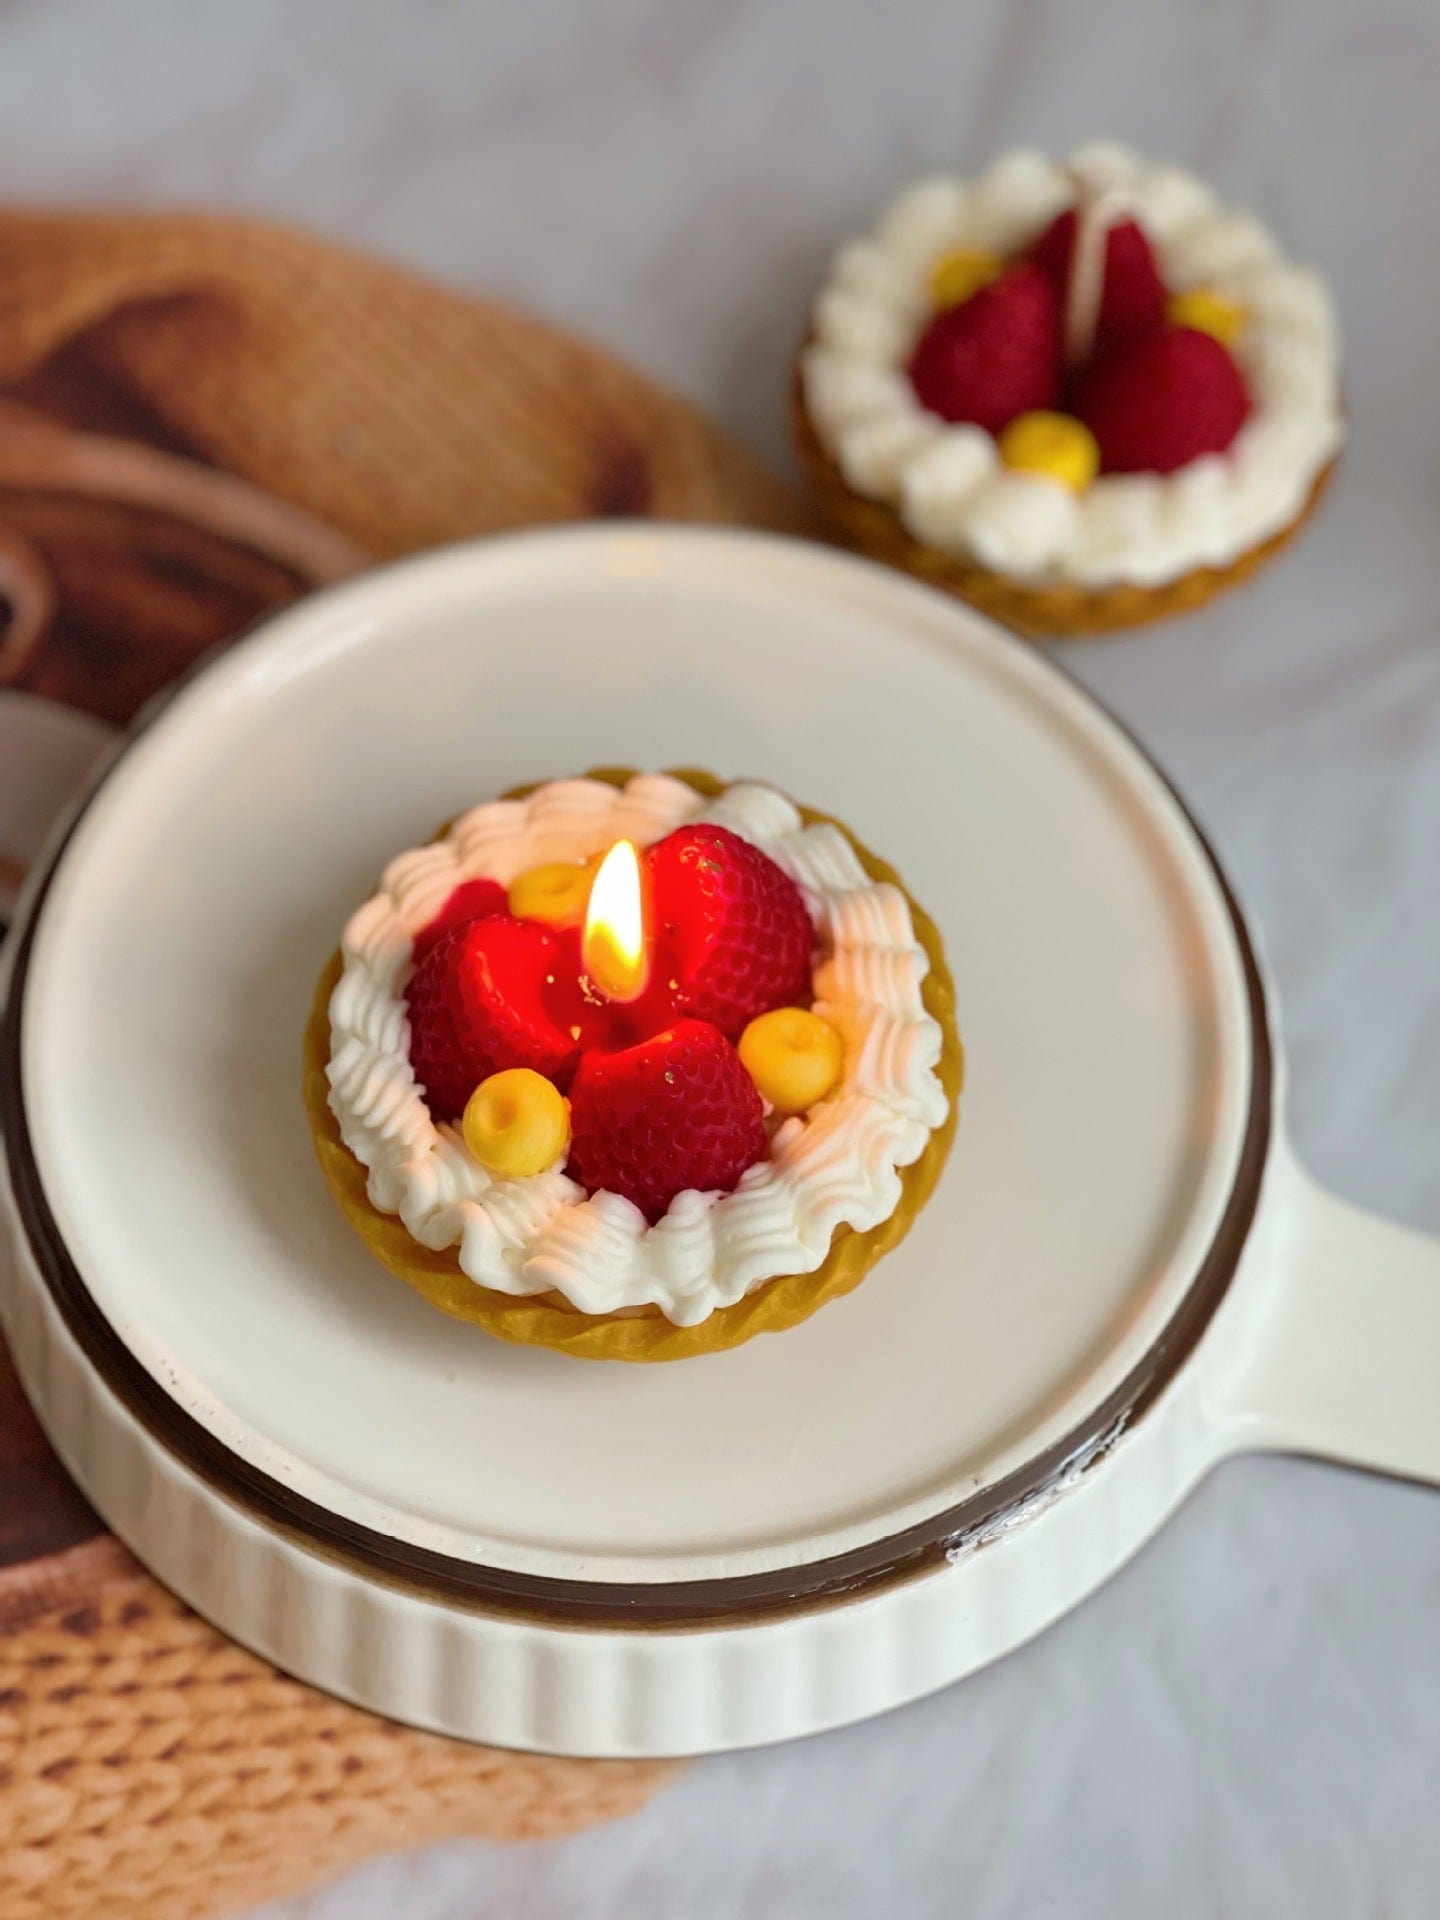 Fruit Tart Decorative Candle